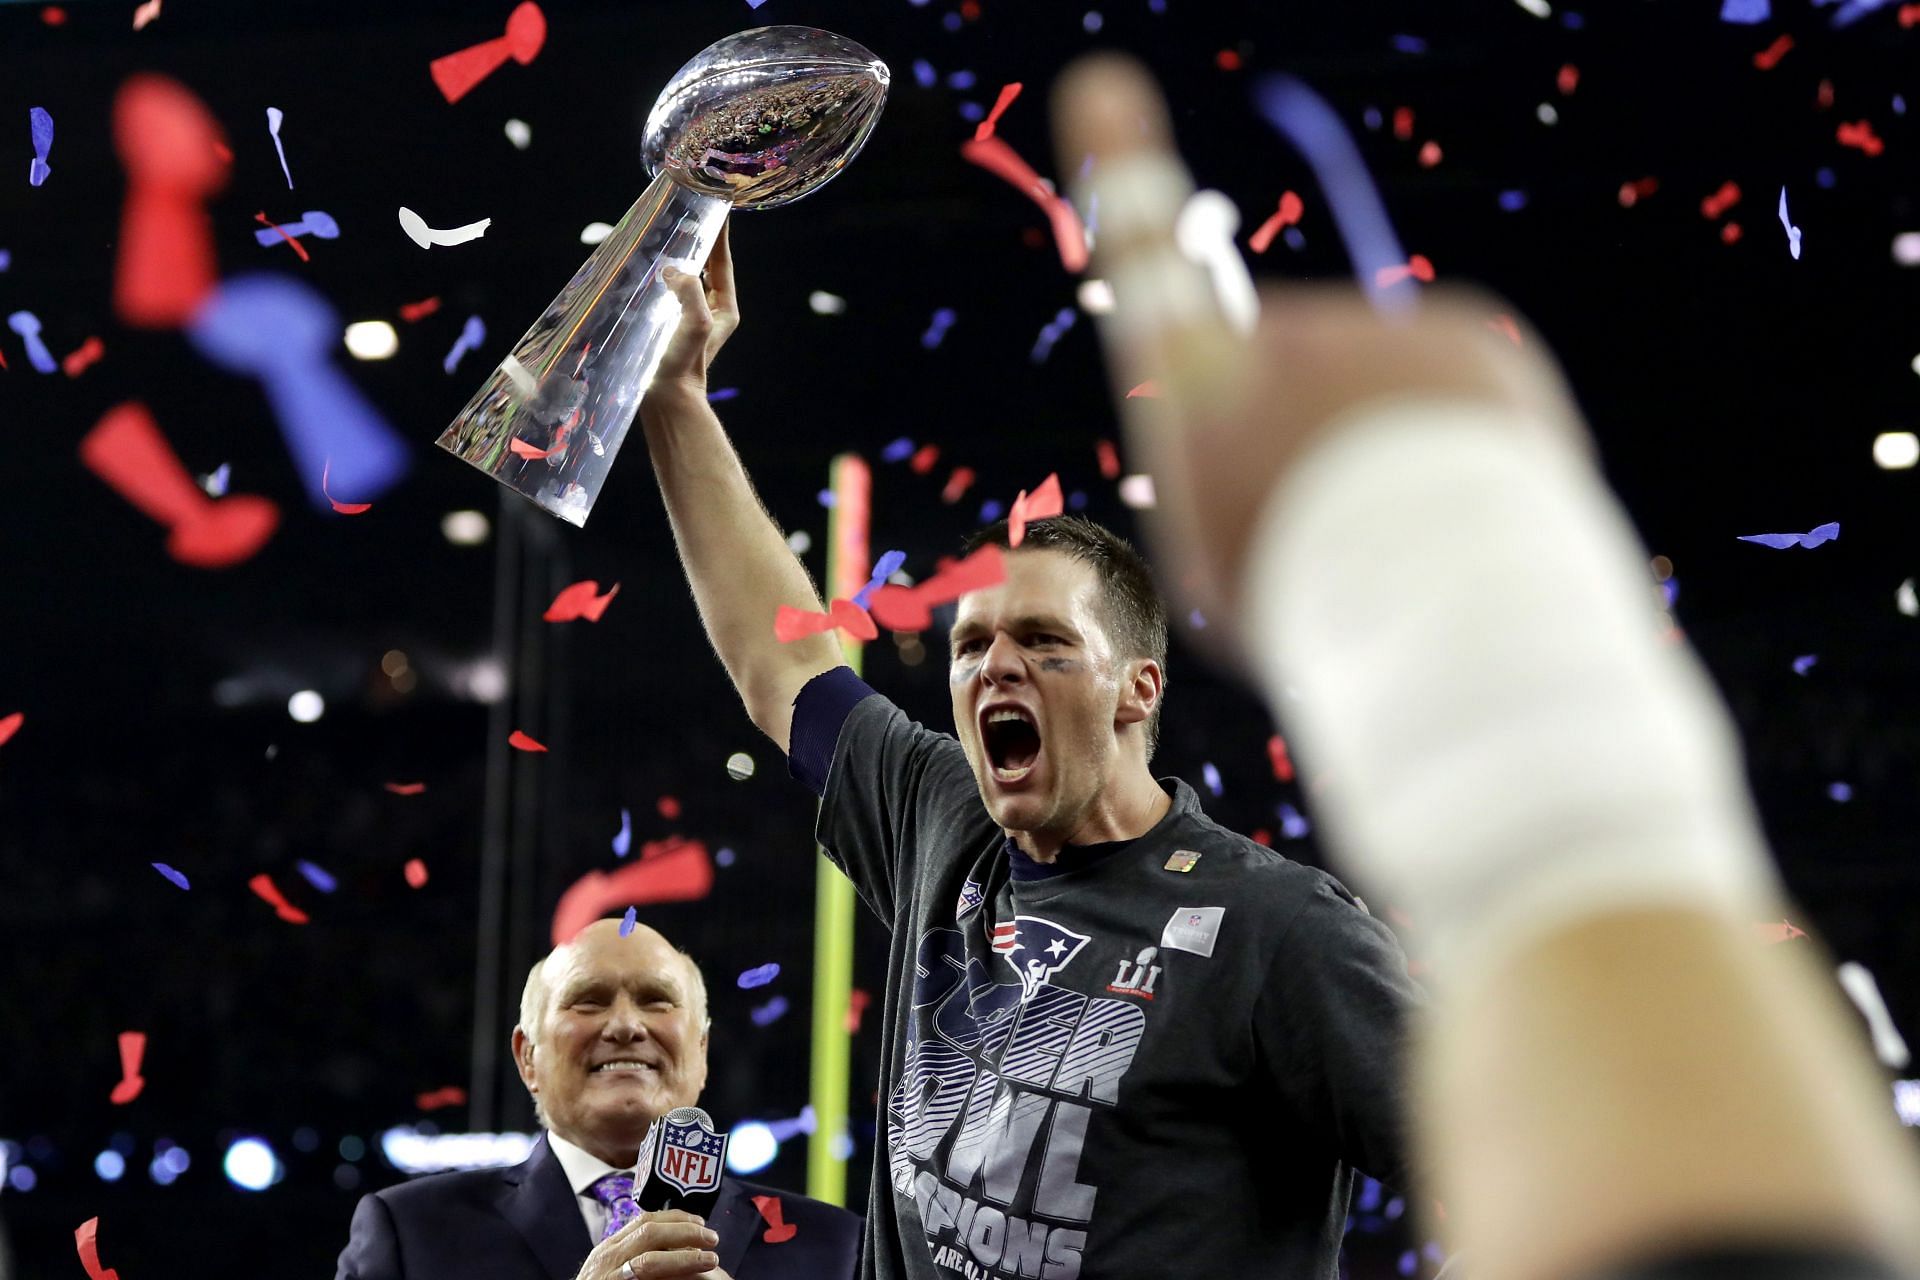 Tom Brady after winning Super Bowl LI with New England Patriots